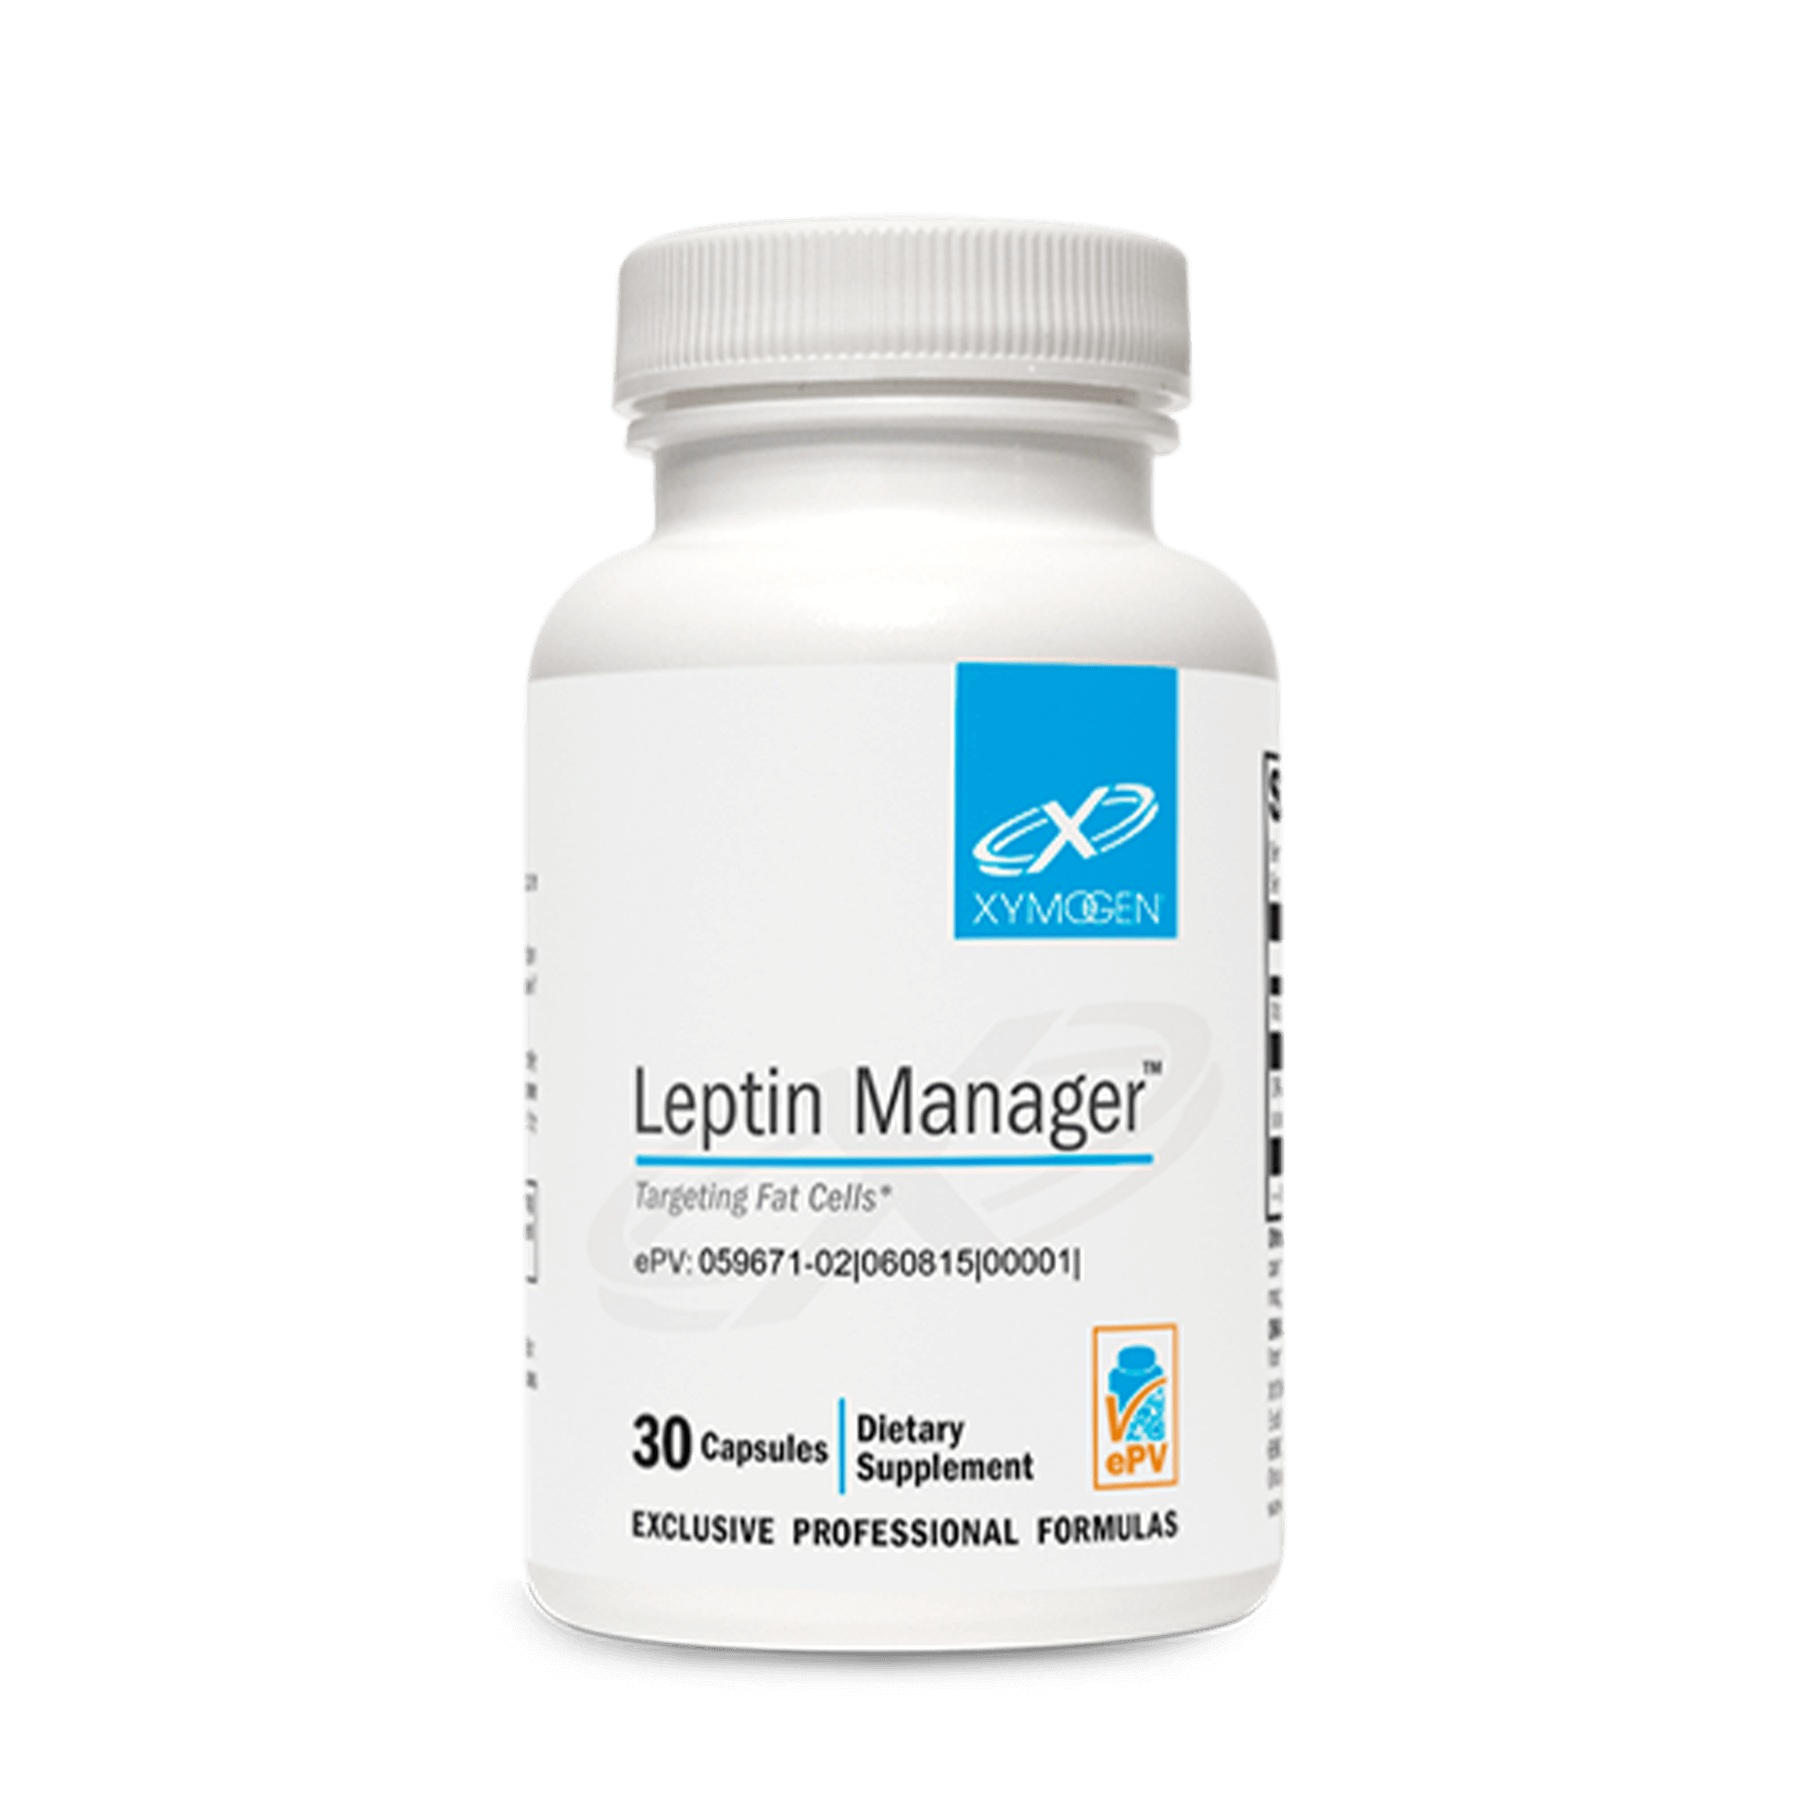 Xymogen Leptin Manager Capsules